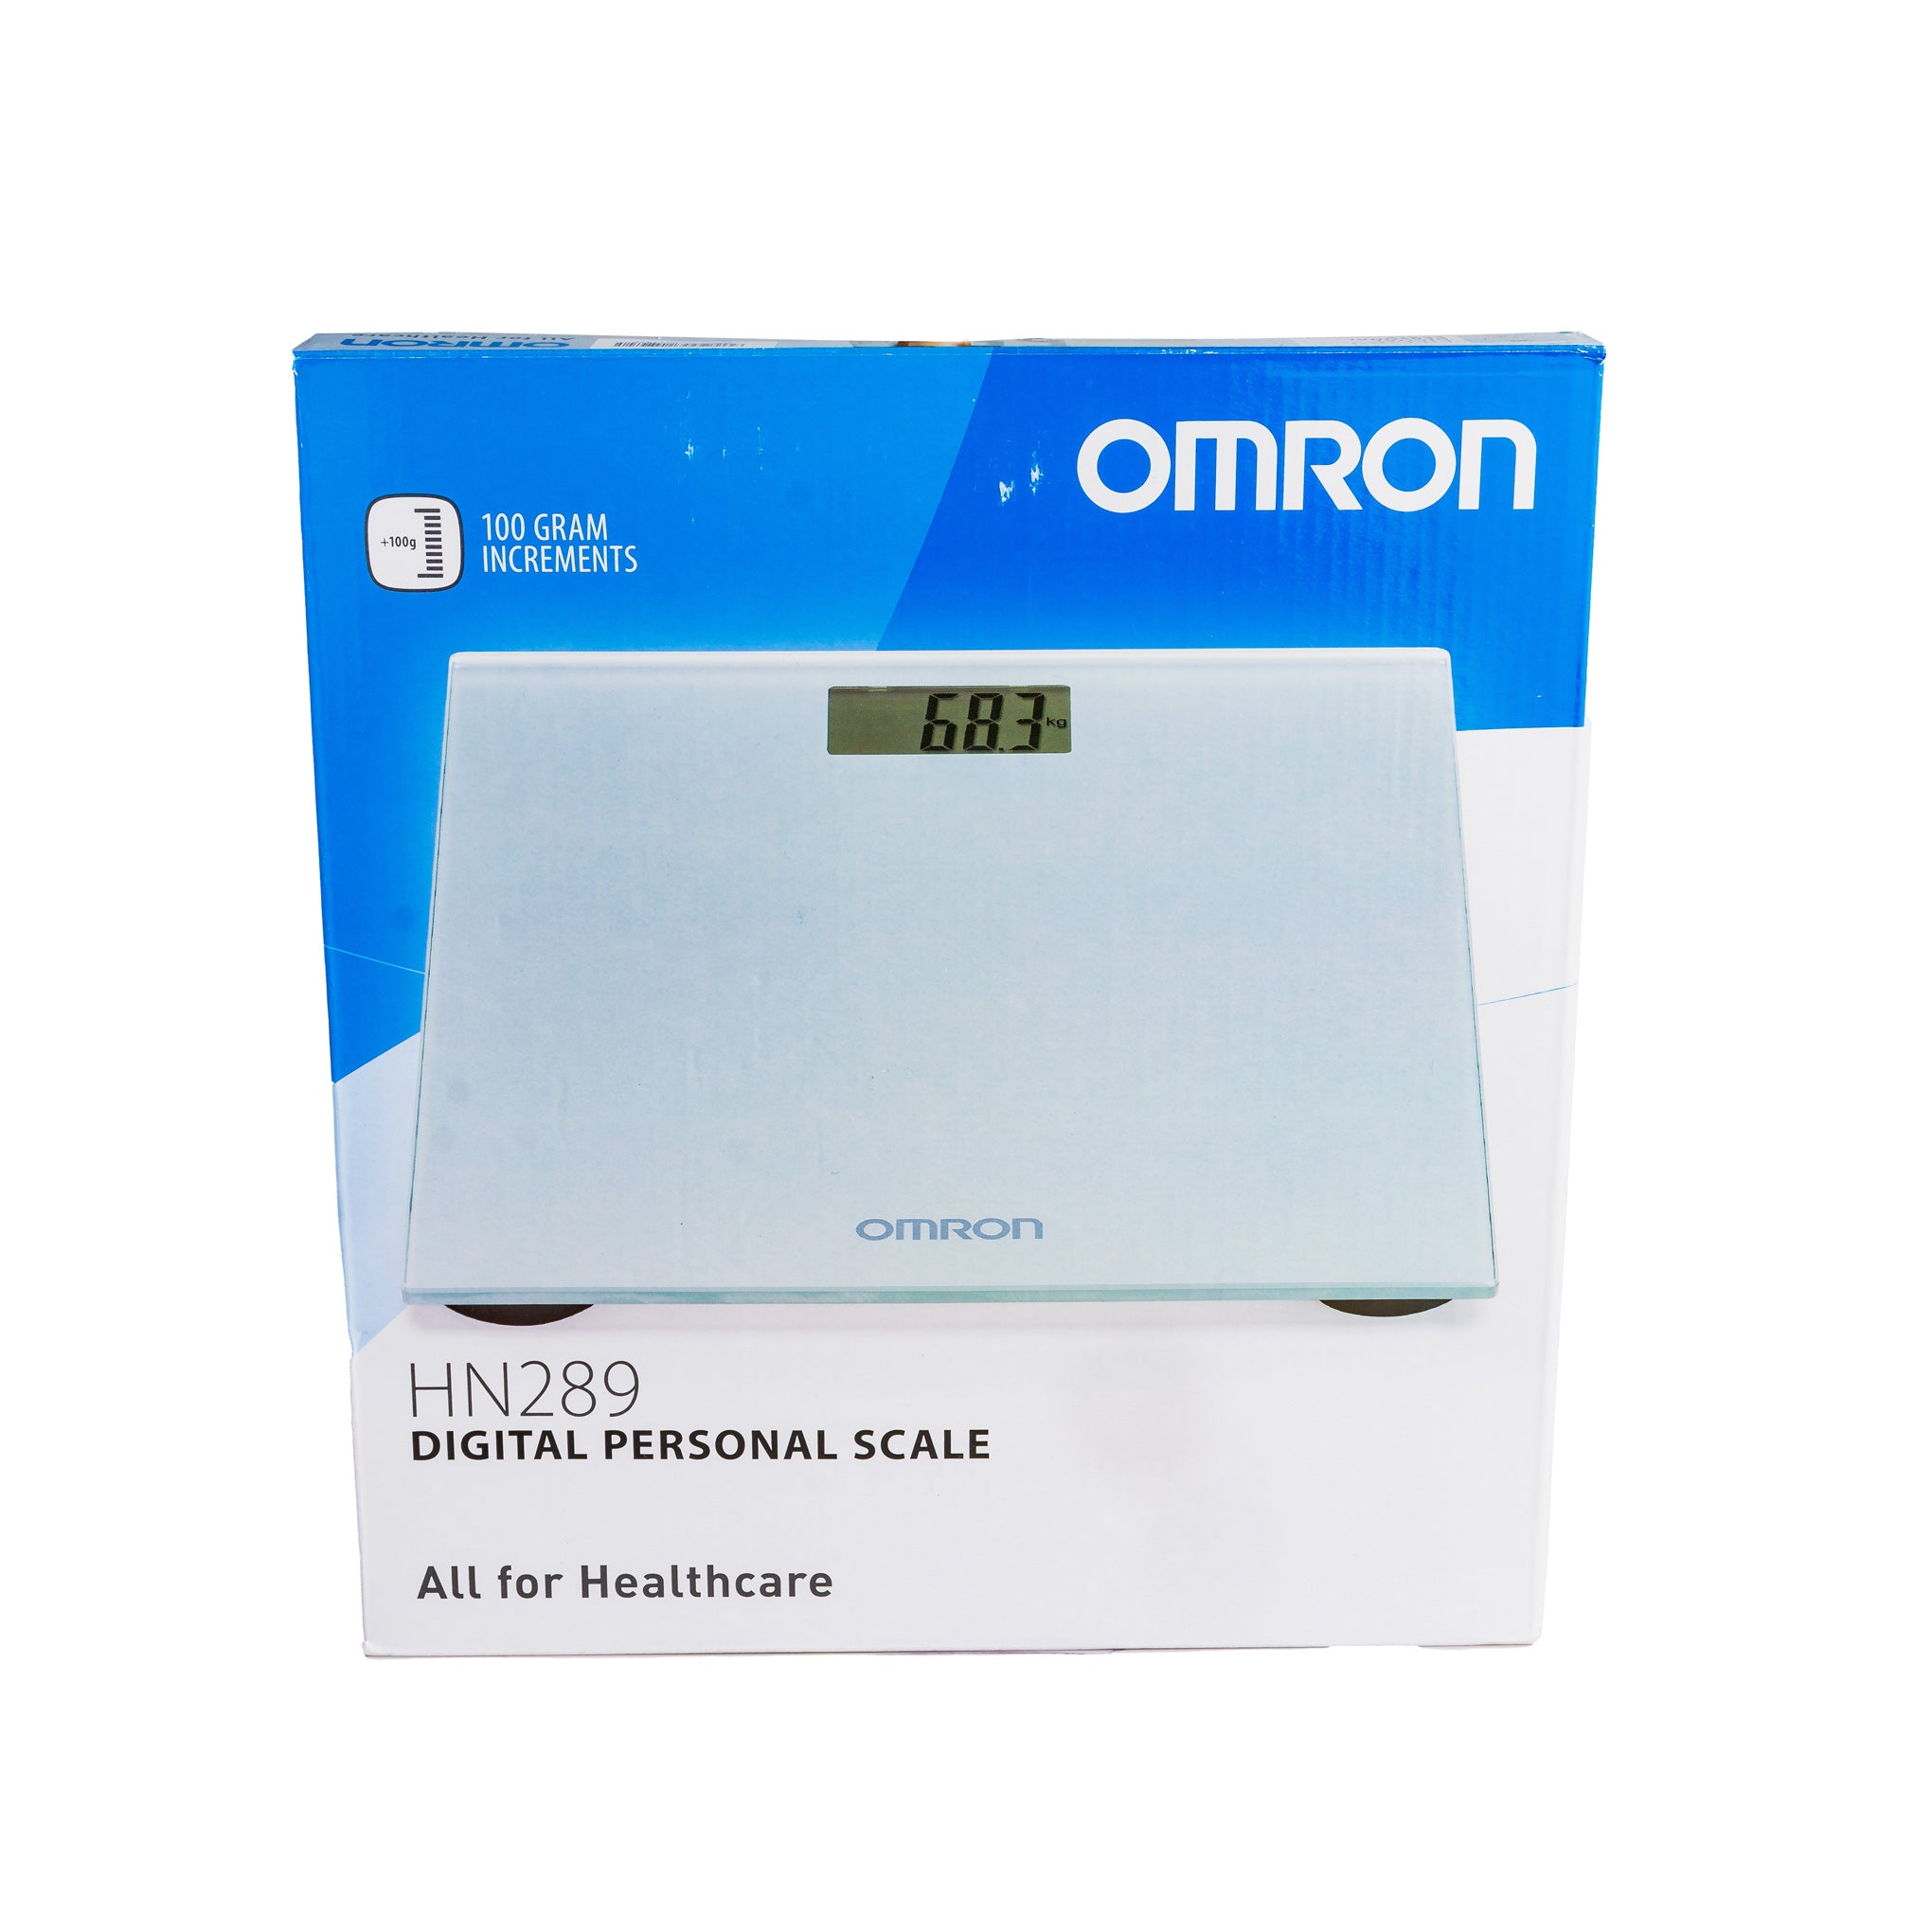 Omron Personal Digital Scale HN289